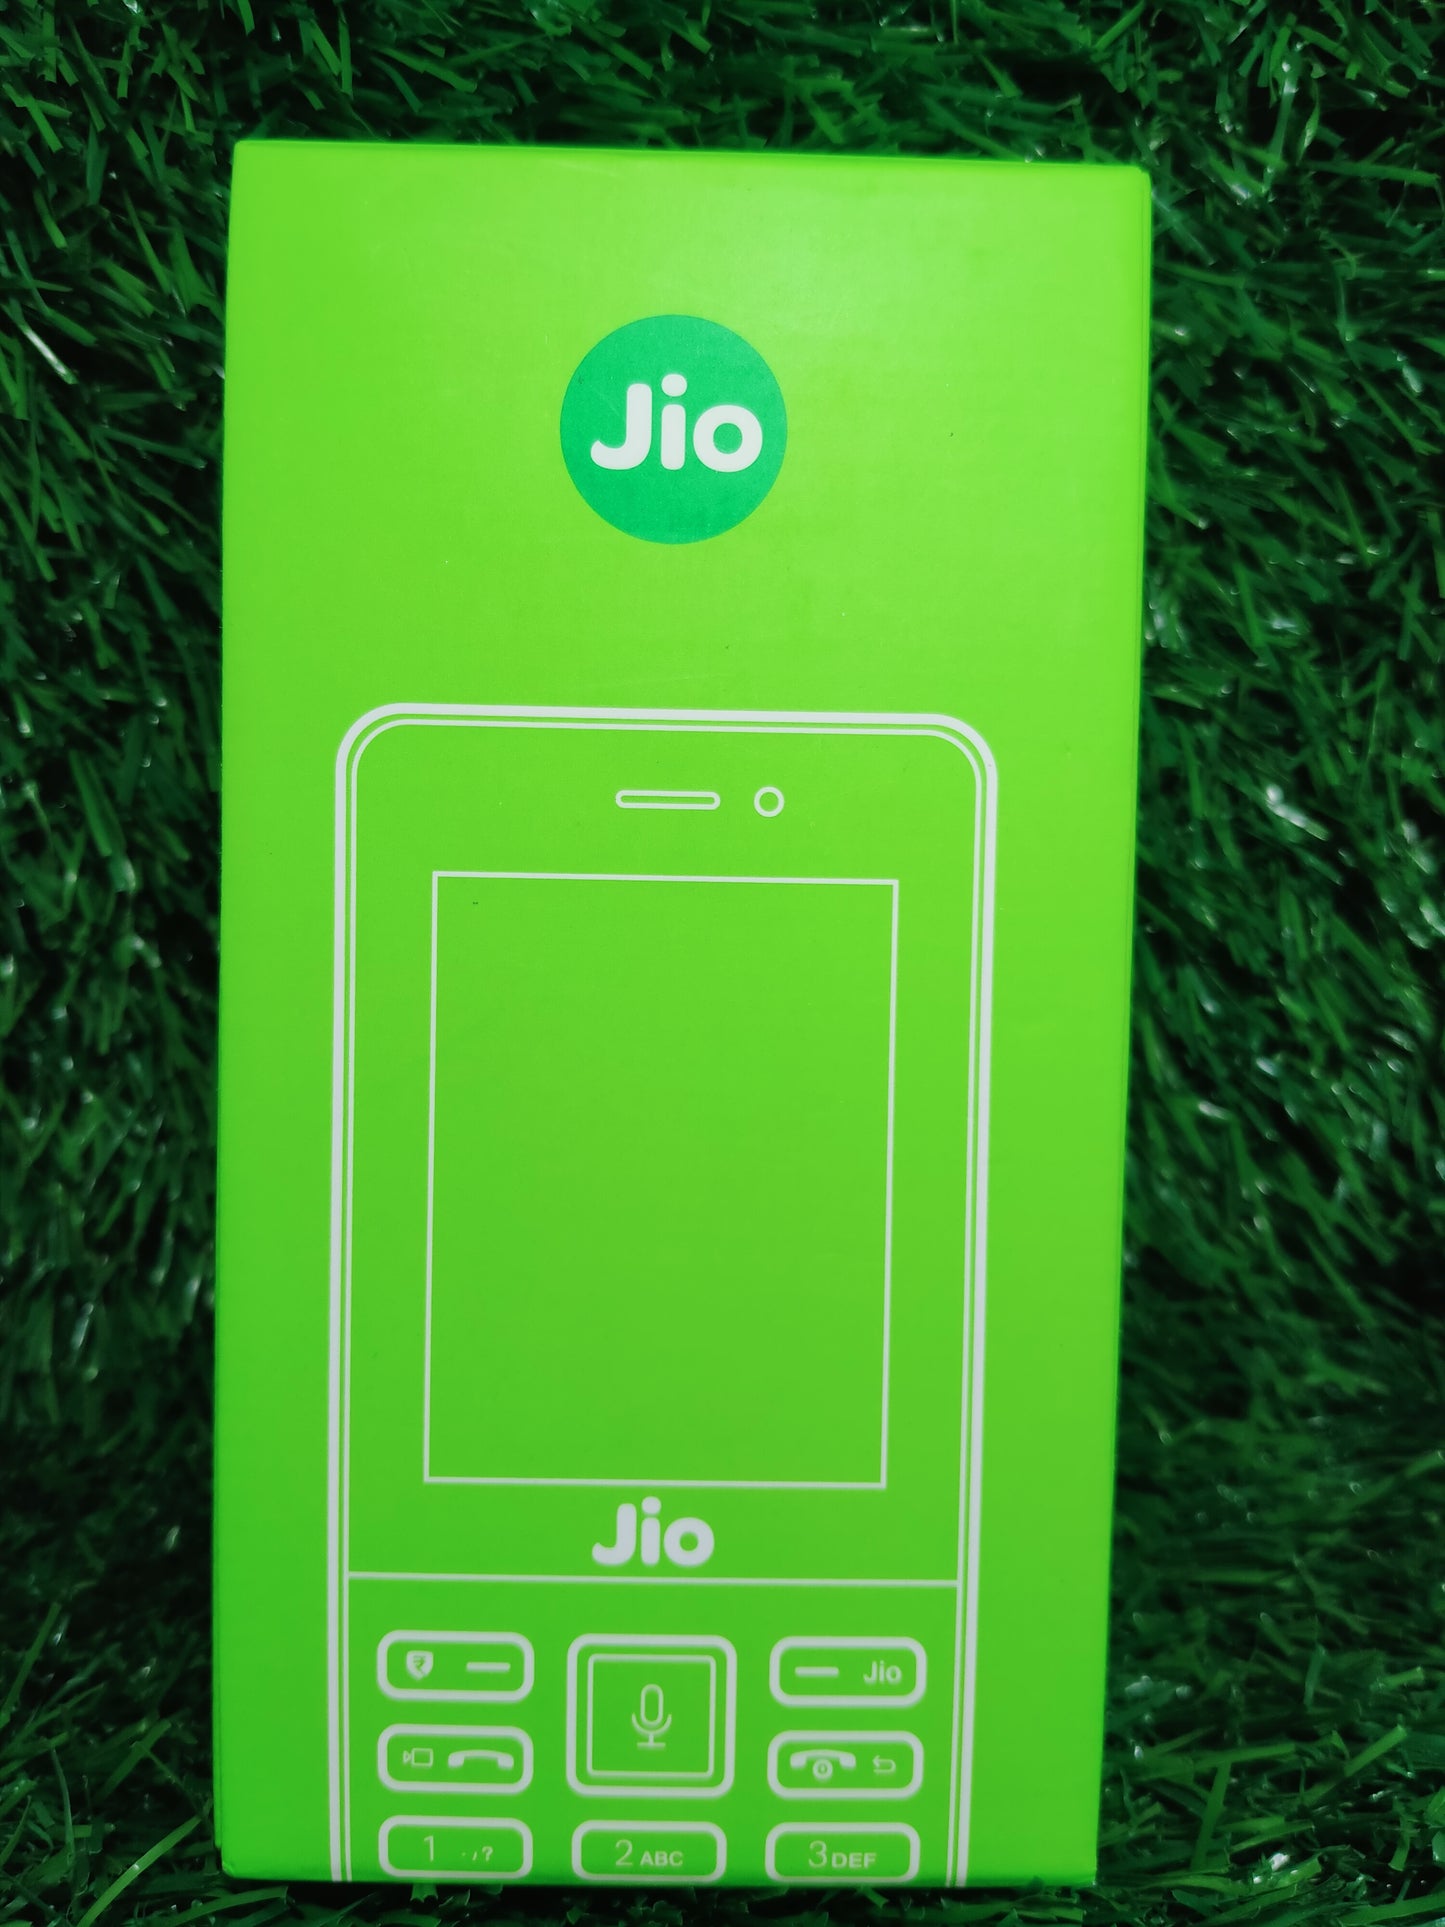 jio green Mobile phone